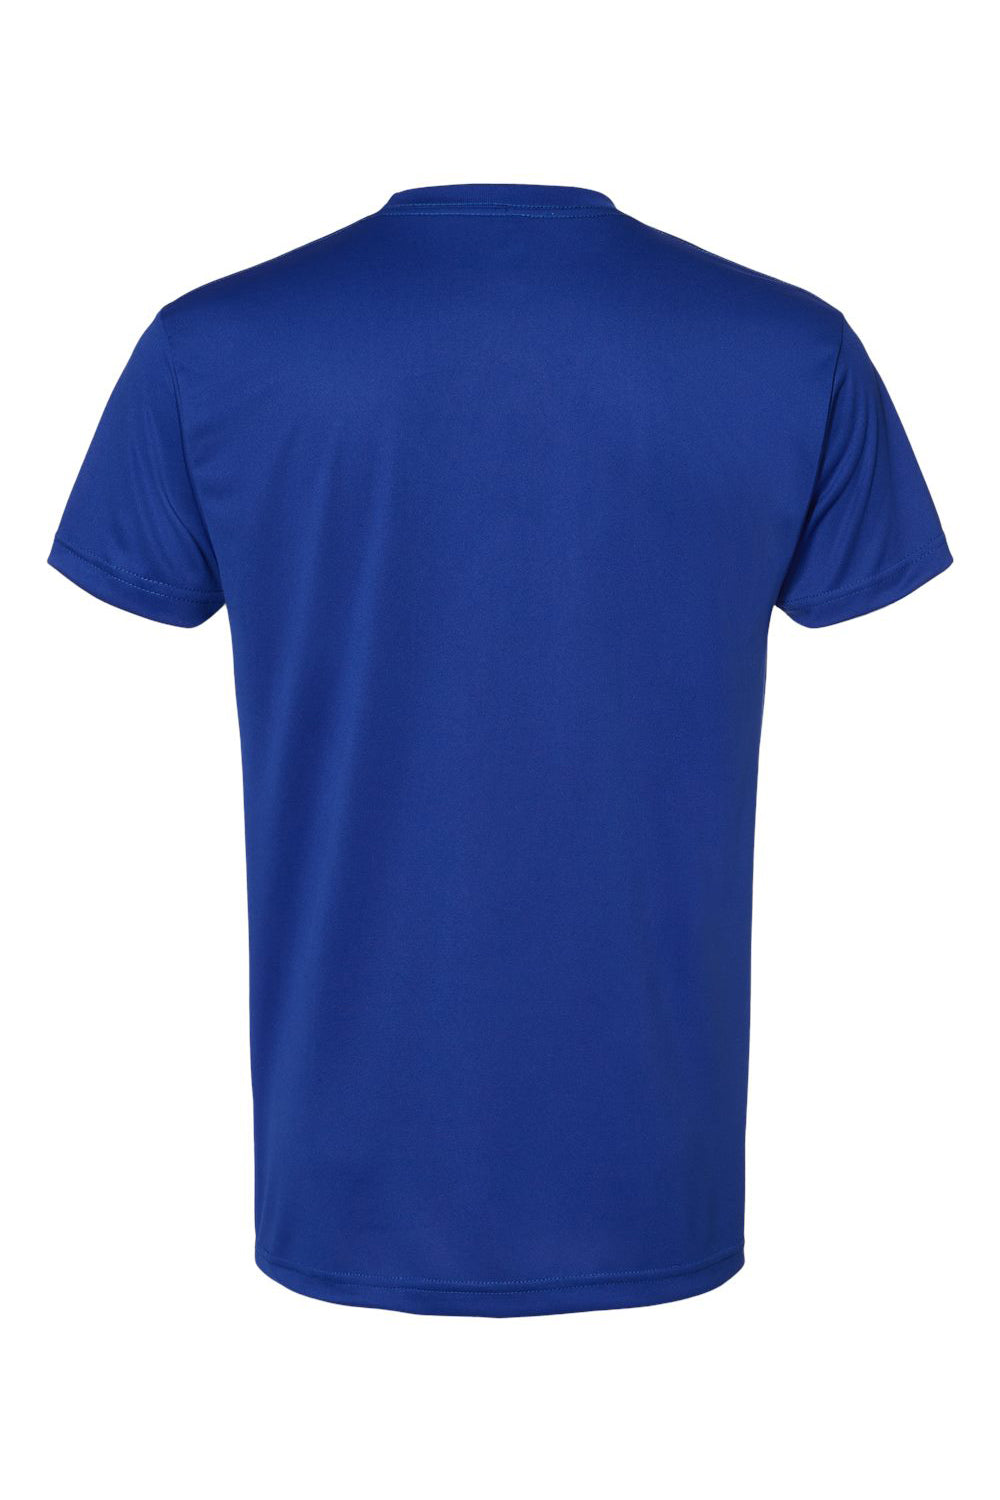 Bayside 5300 Mens USA Made Performance Short Sleeve Crewneck T-Shirt Royal Blue Flat Back